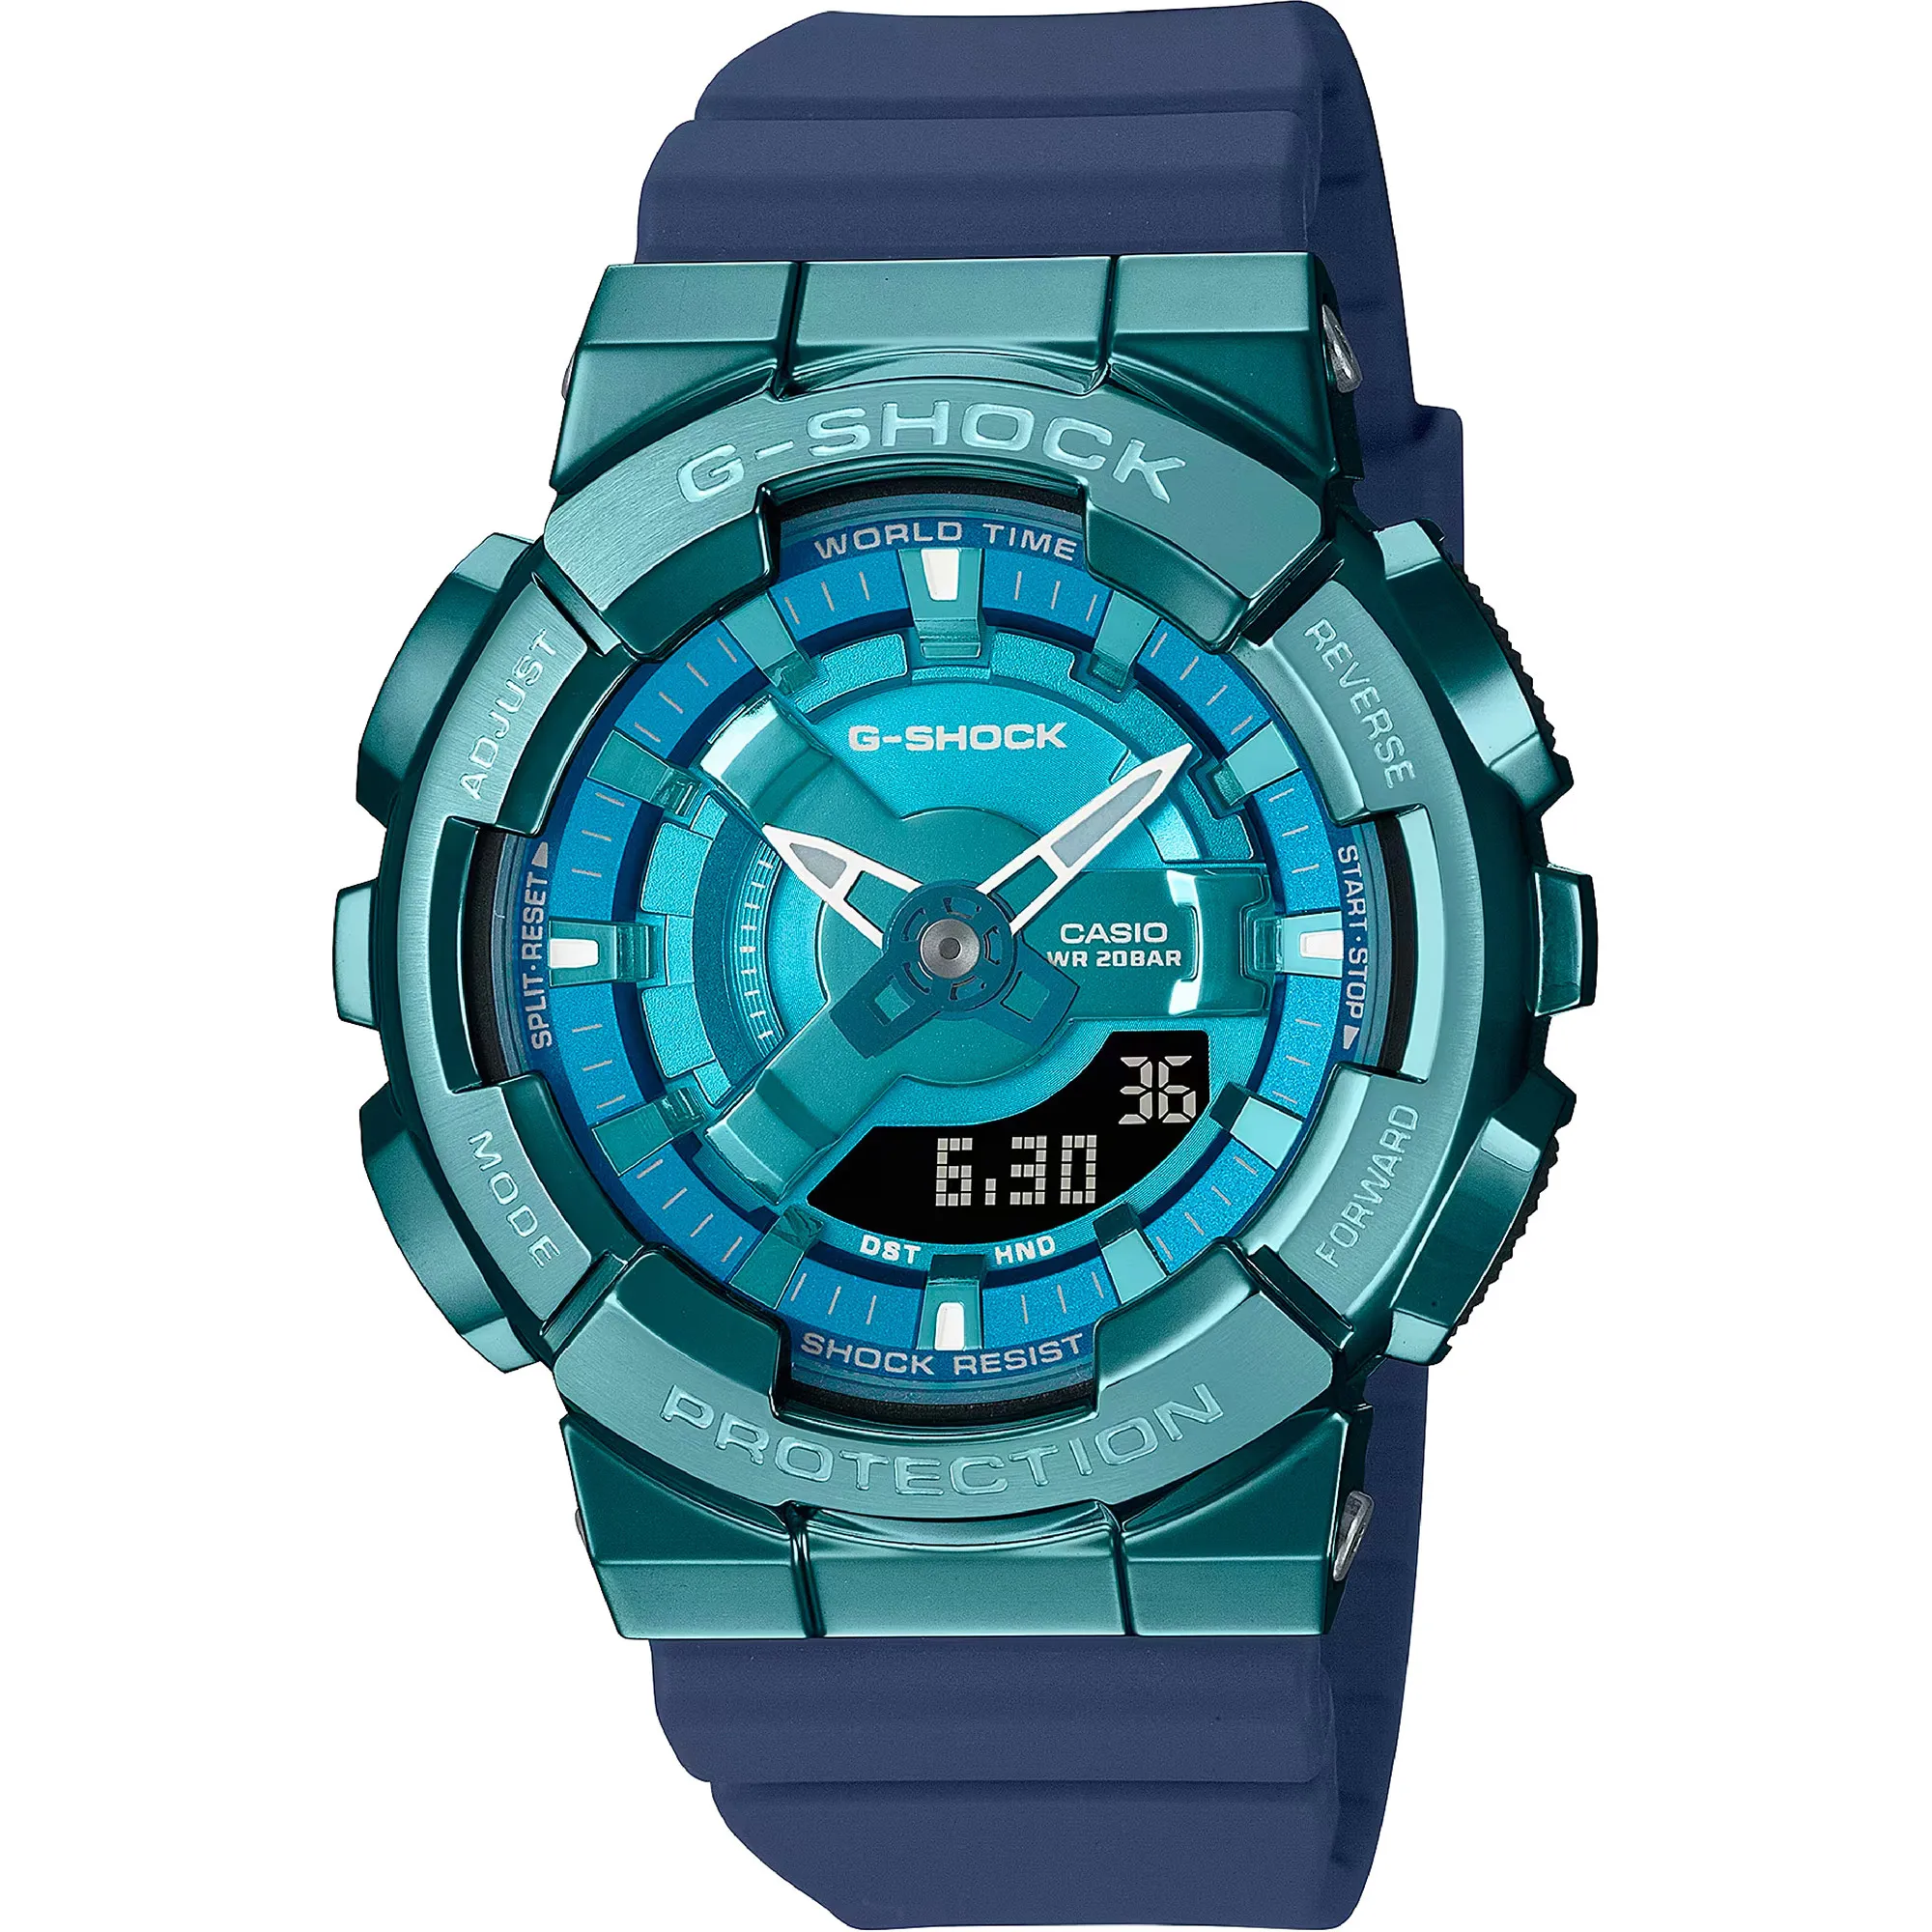 Watch CASIO G-Shock gm-s110lb-2aer